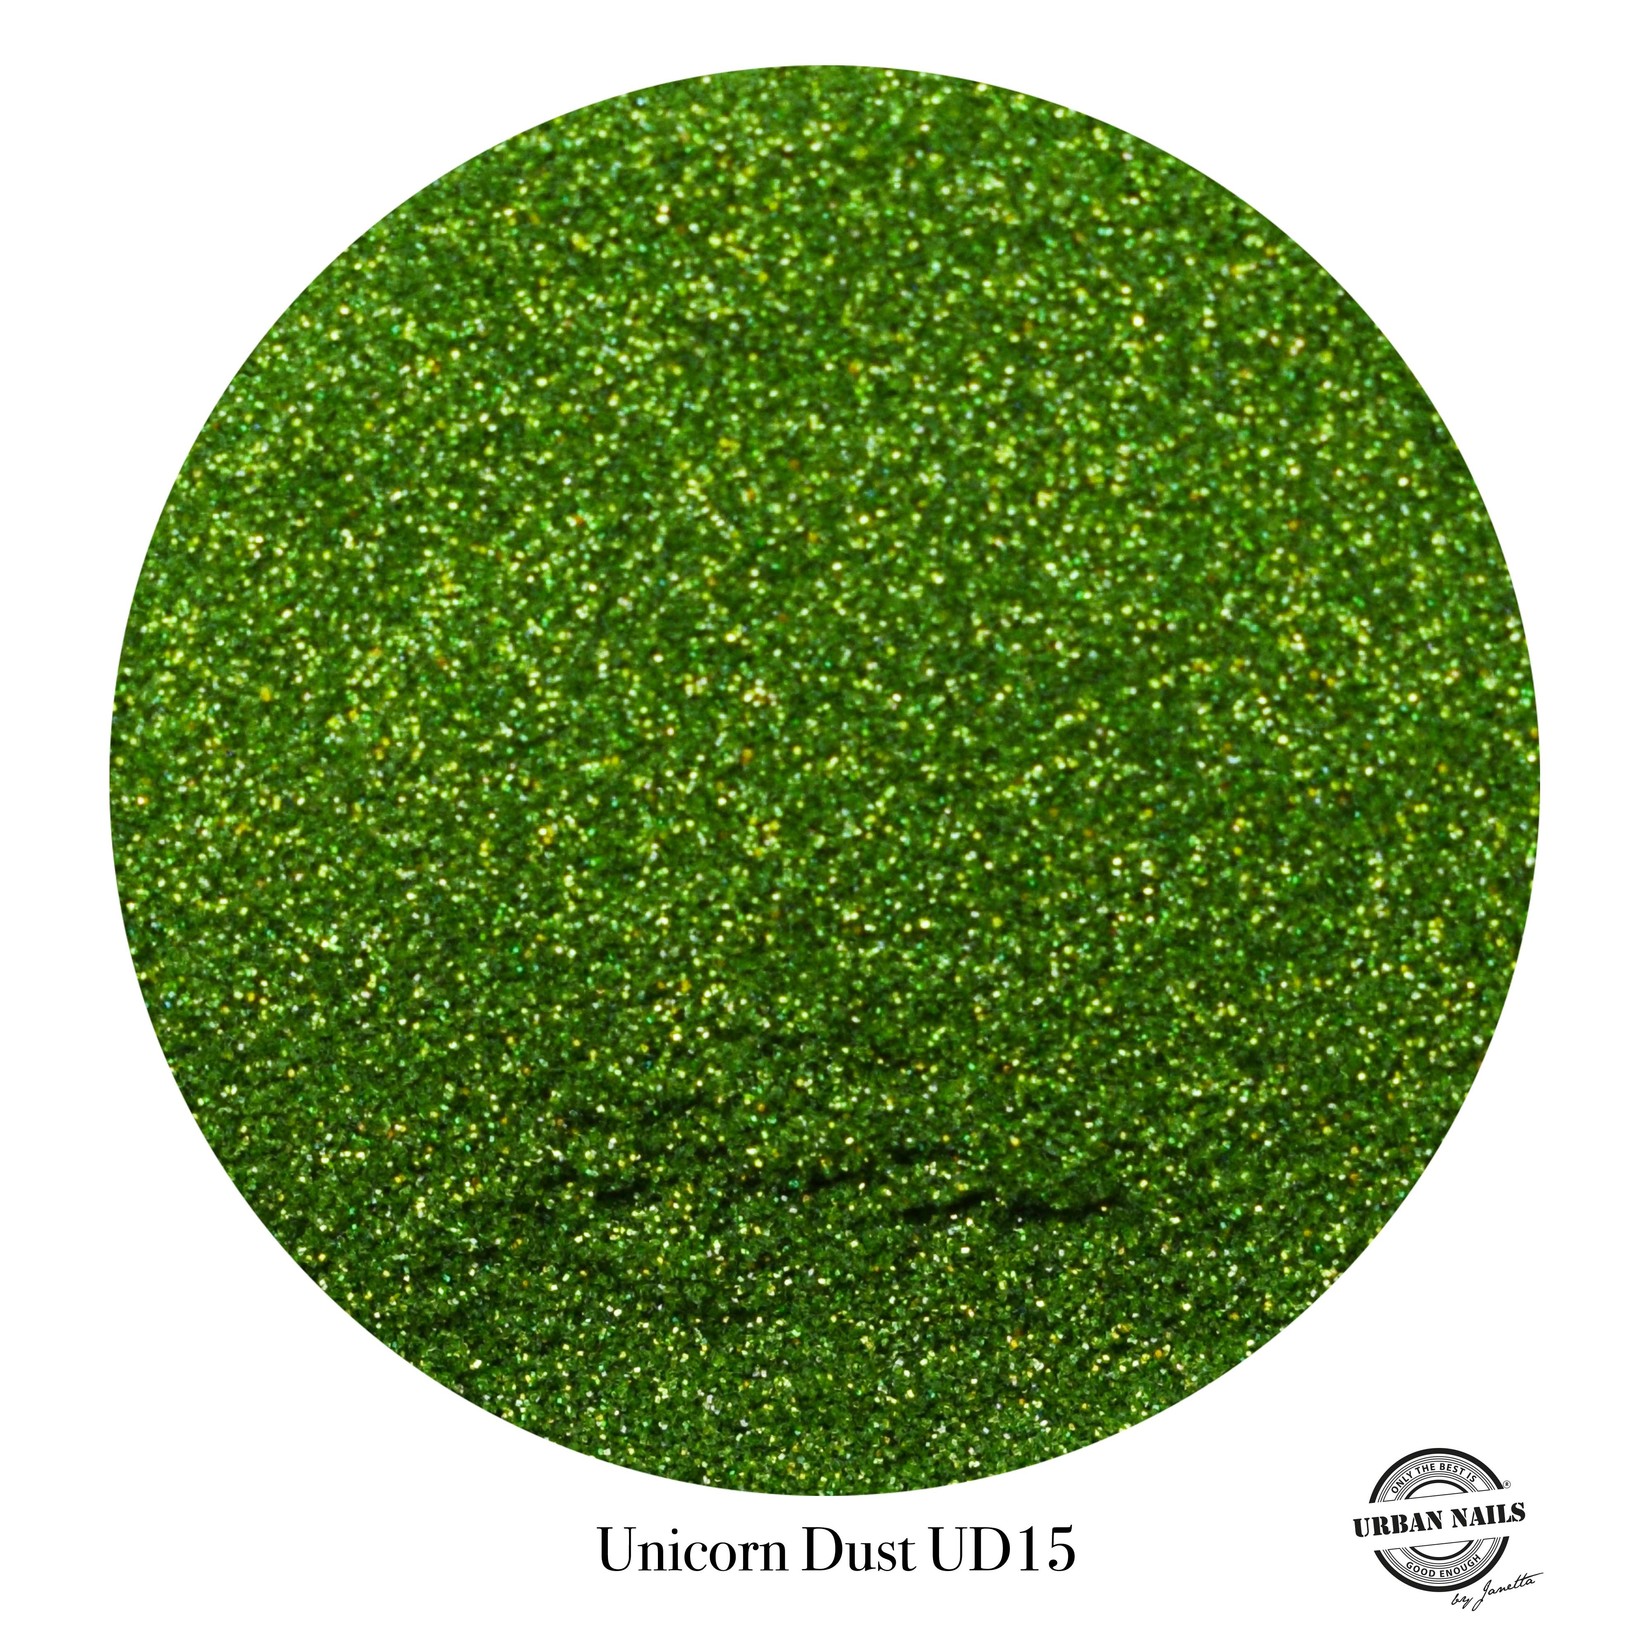 Urban Nails Unicorn Dust 15 Lime Groen